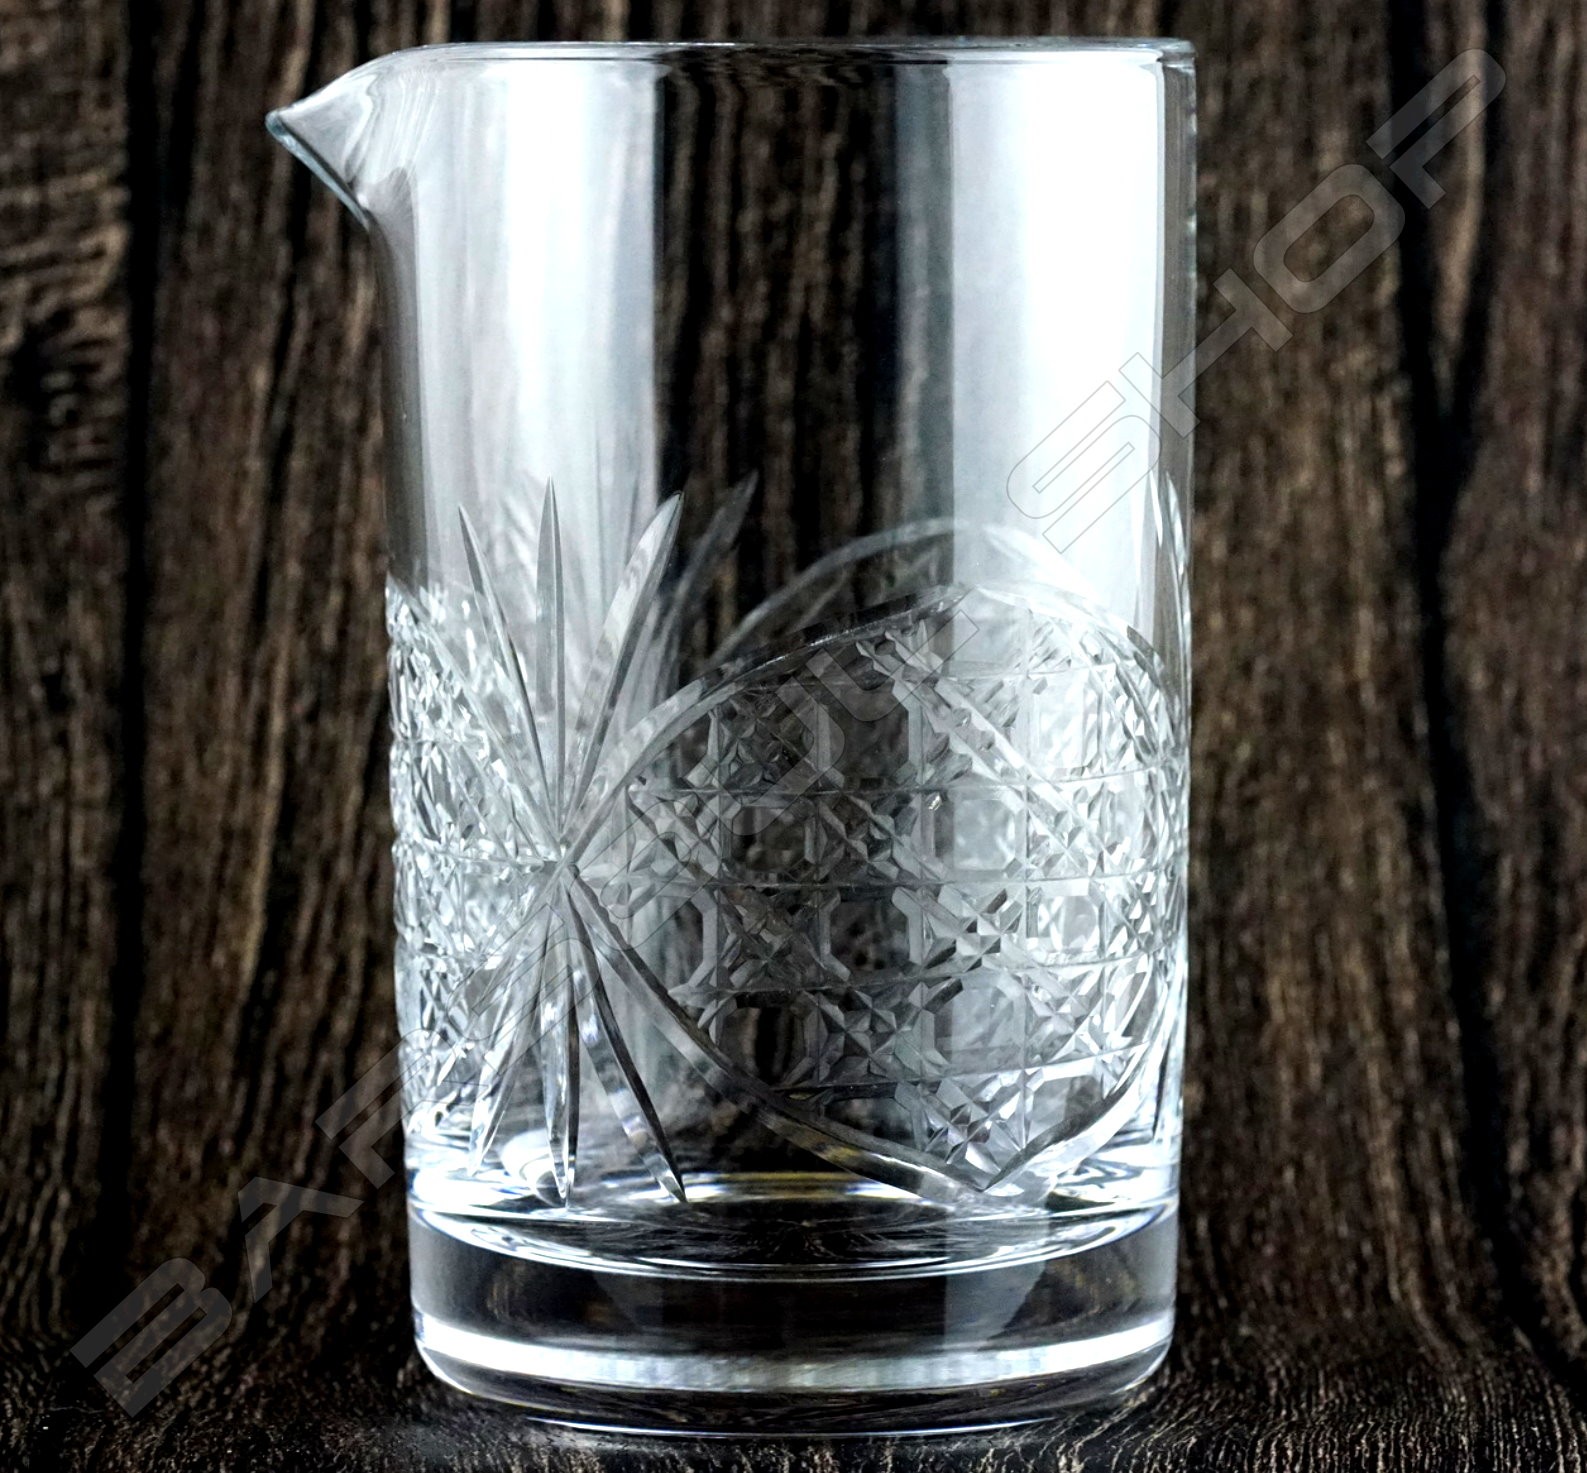 水晶攪拌杯 皇族款630ml Crystal mixing glass (Royal) H15